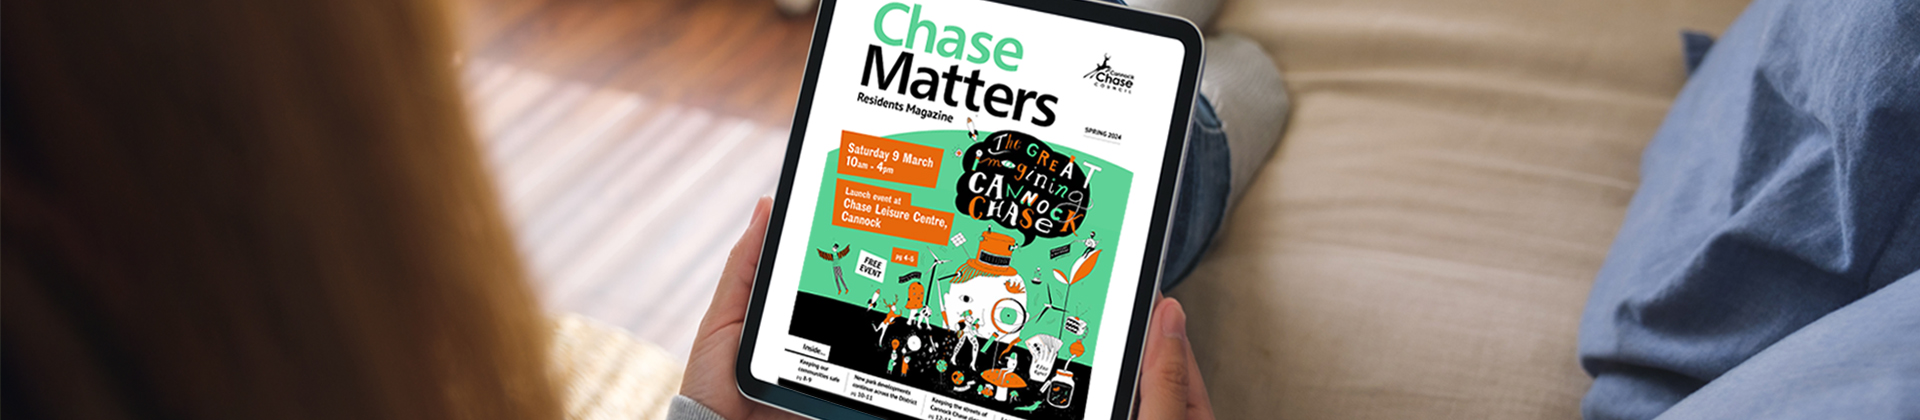 Chase Matters Residents Magazine